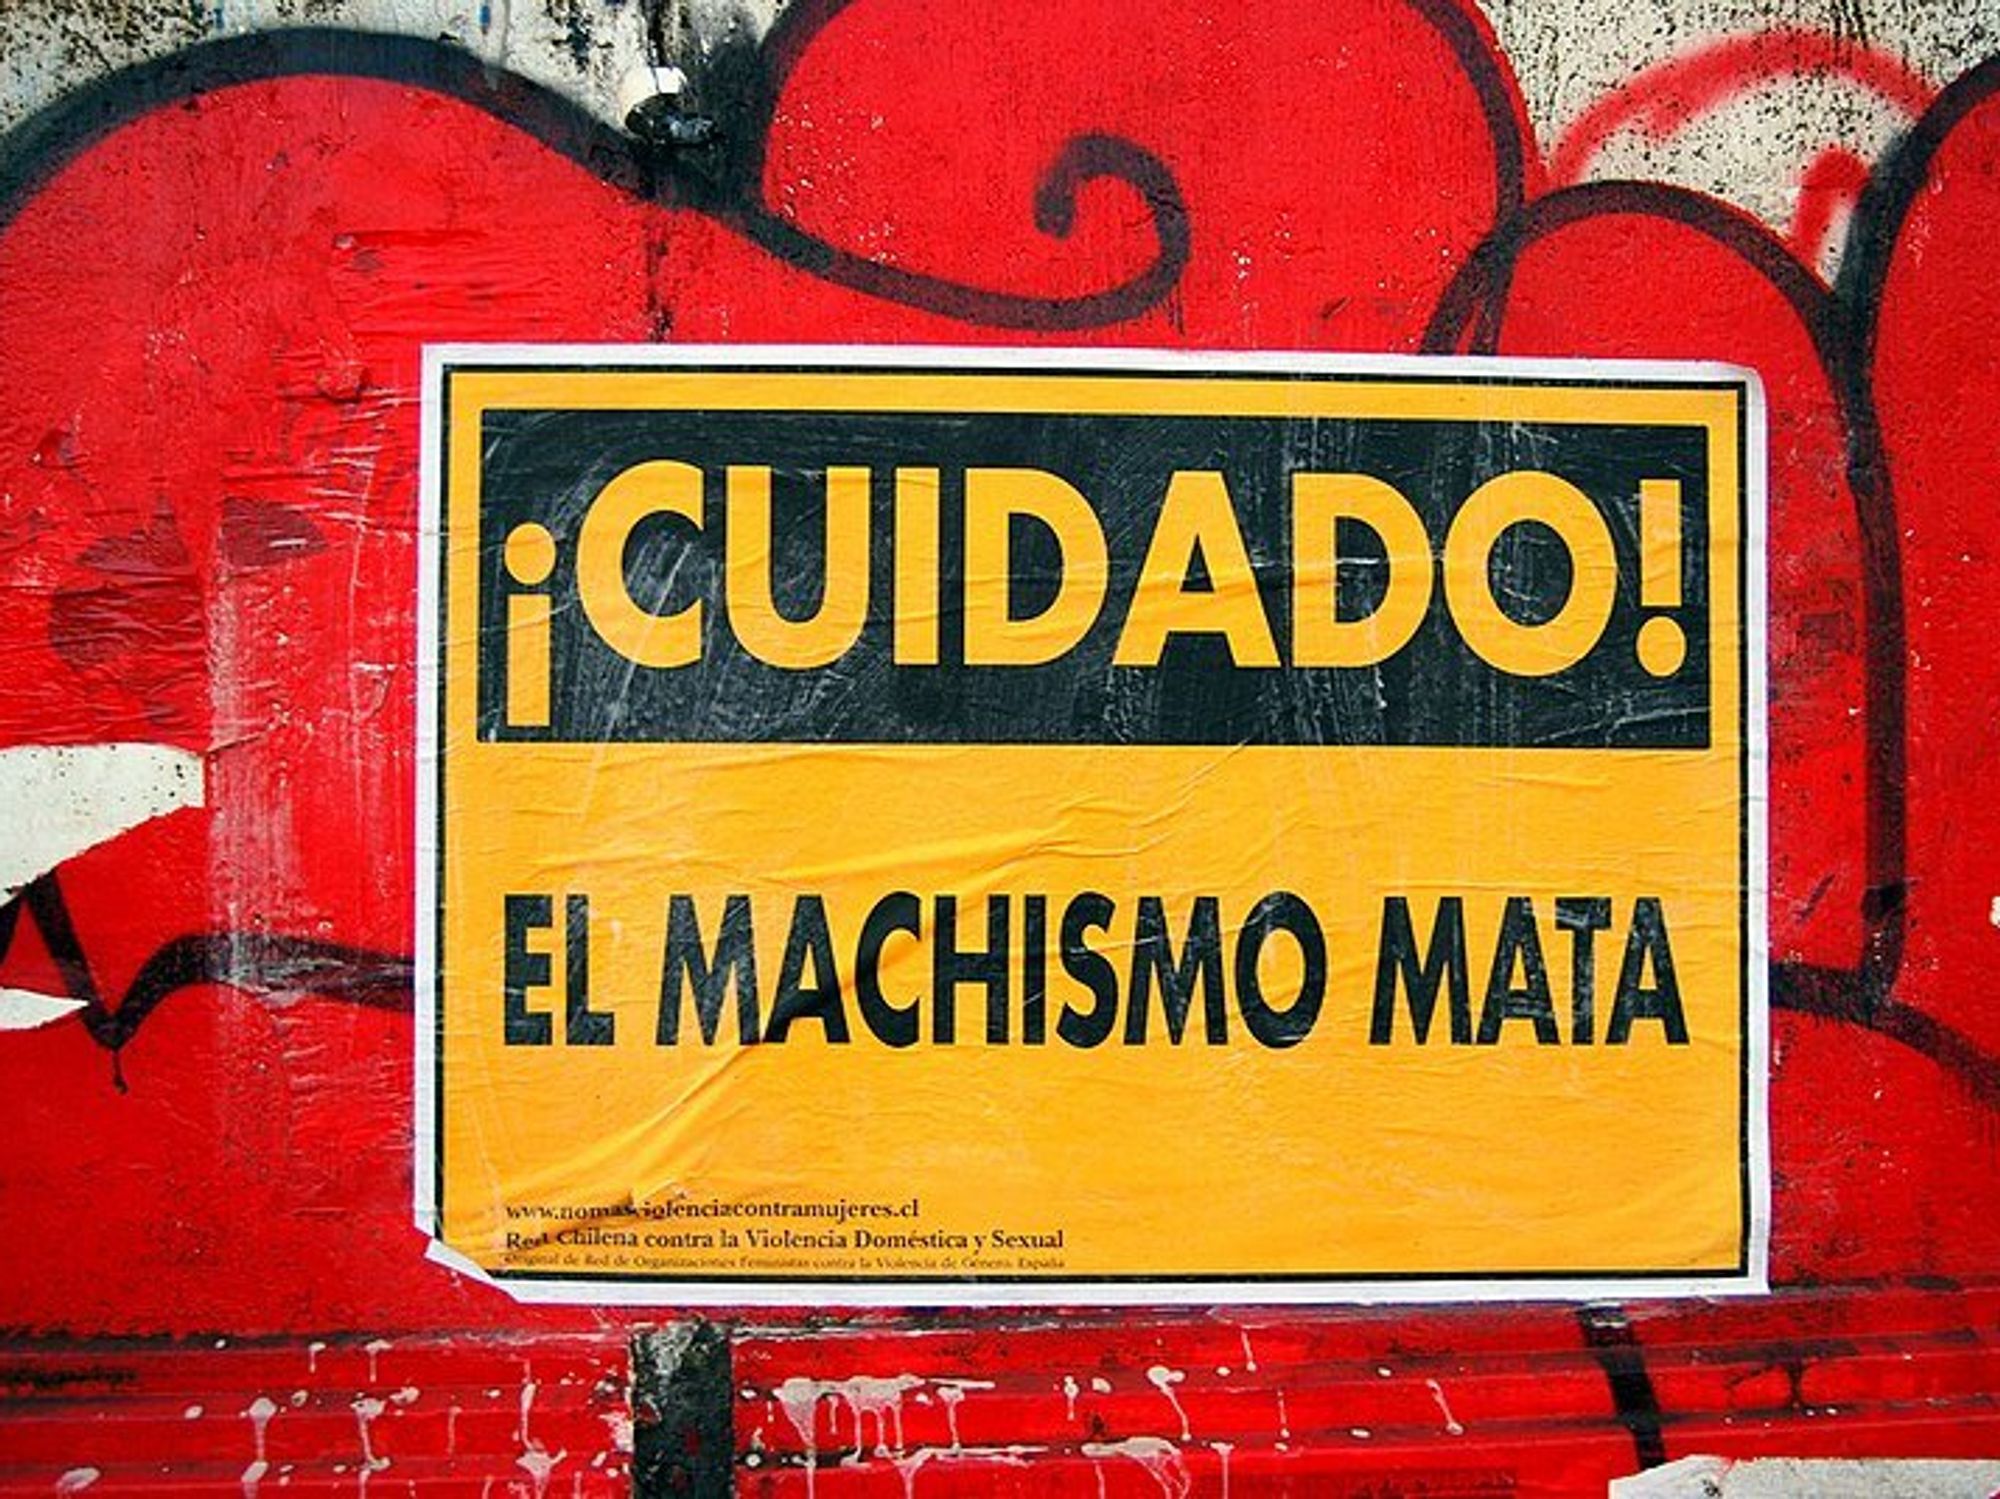 Street poster denouncing machismo culture.